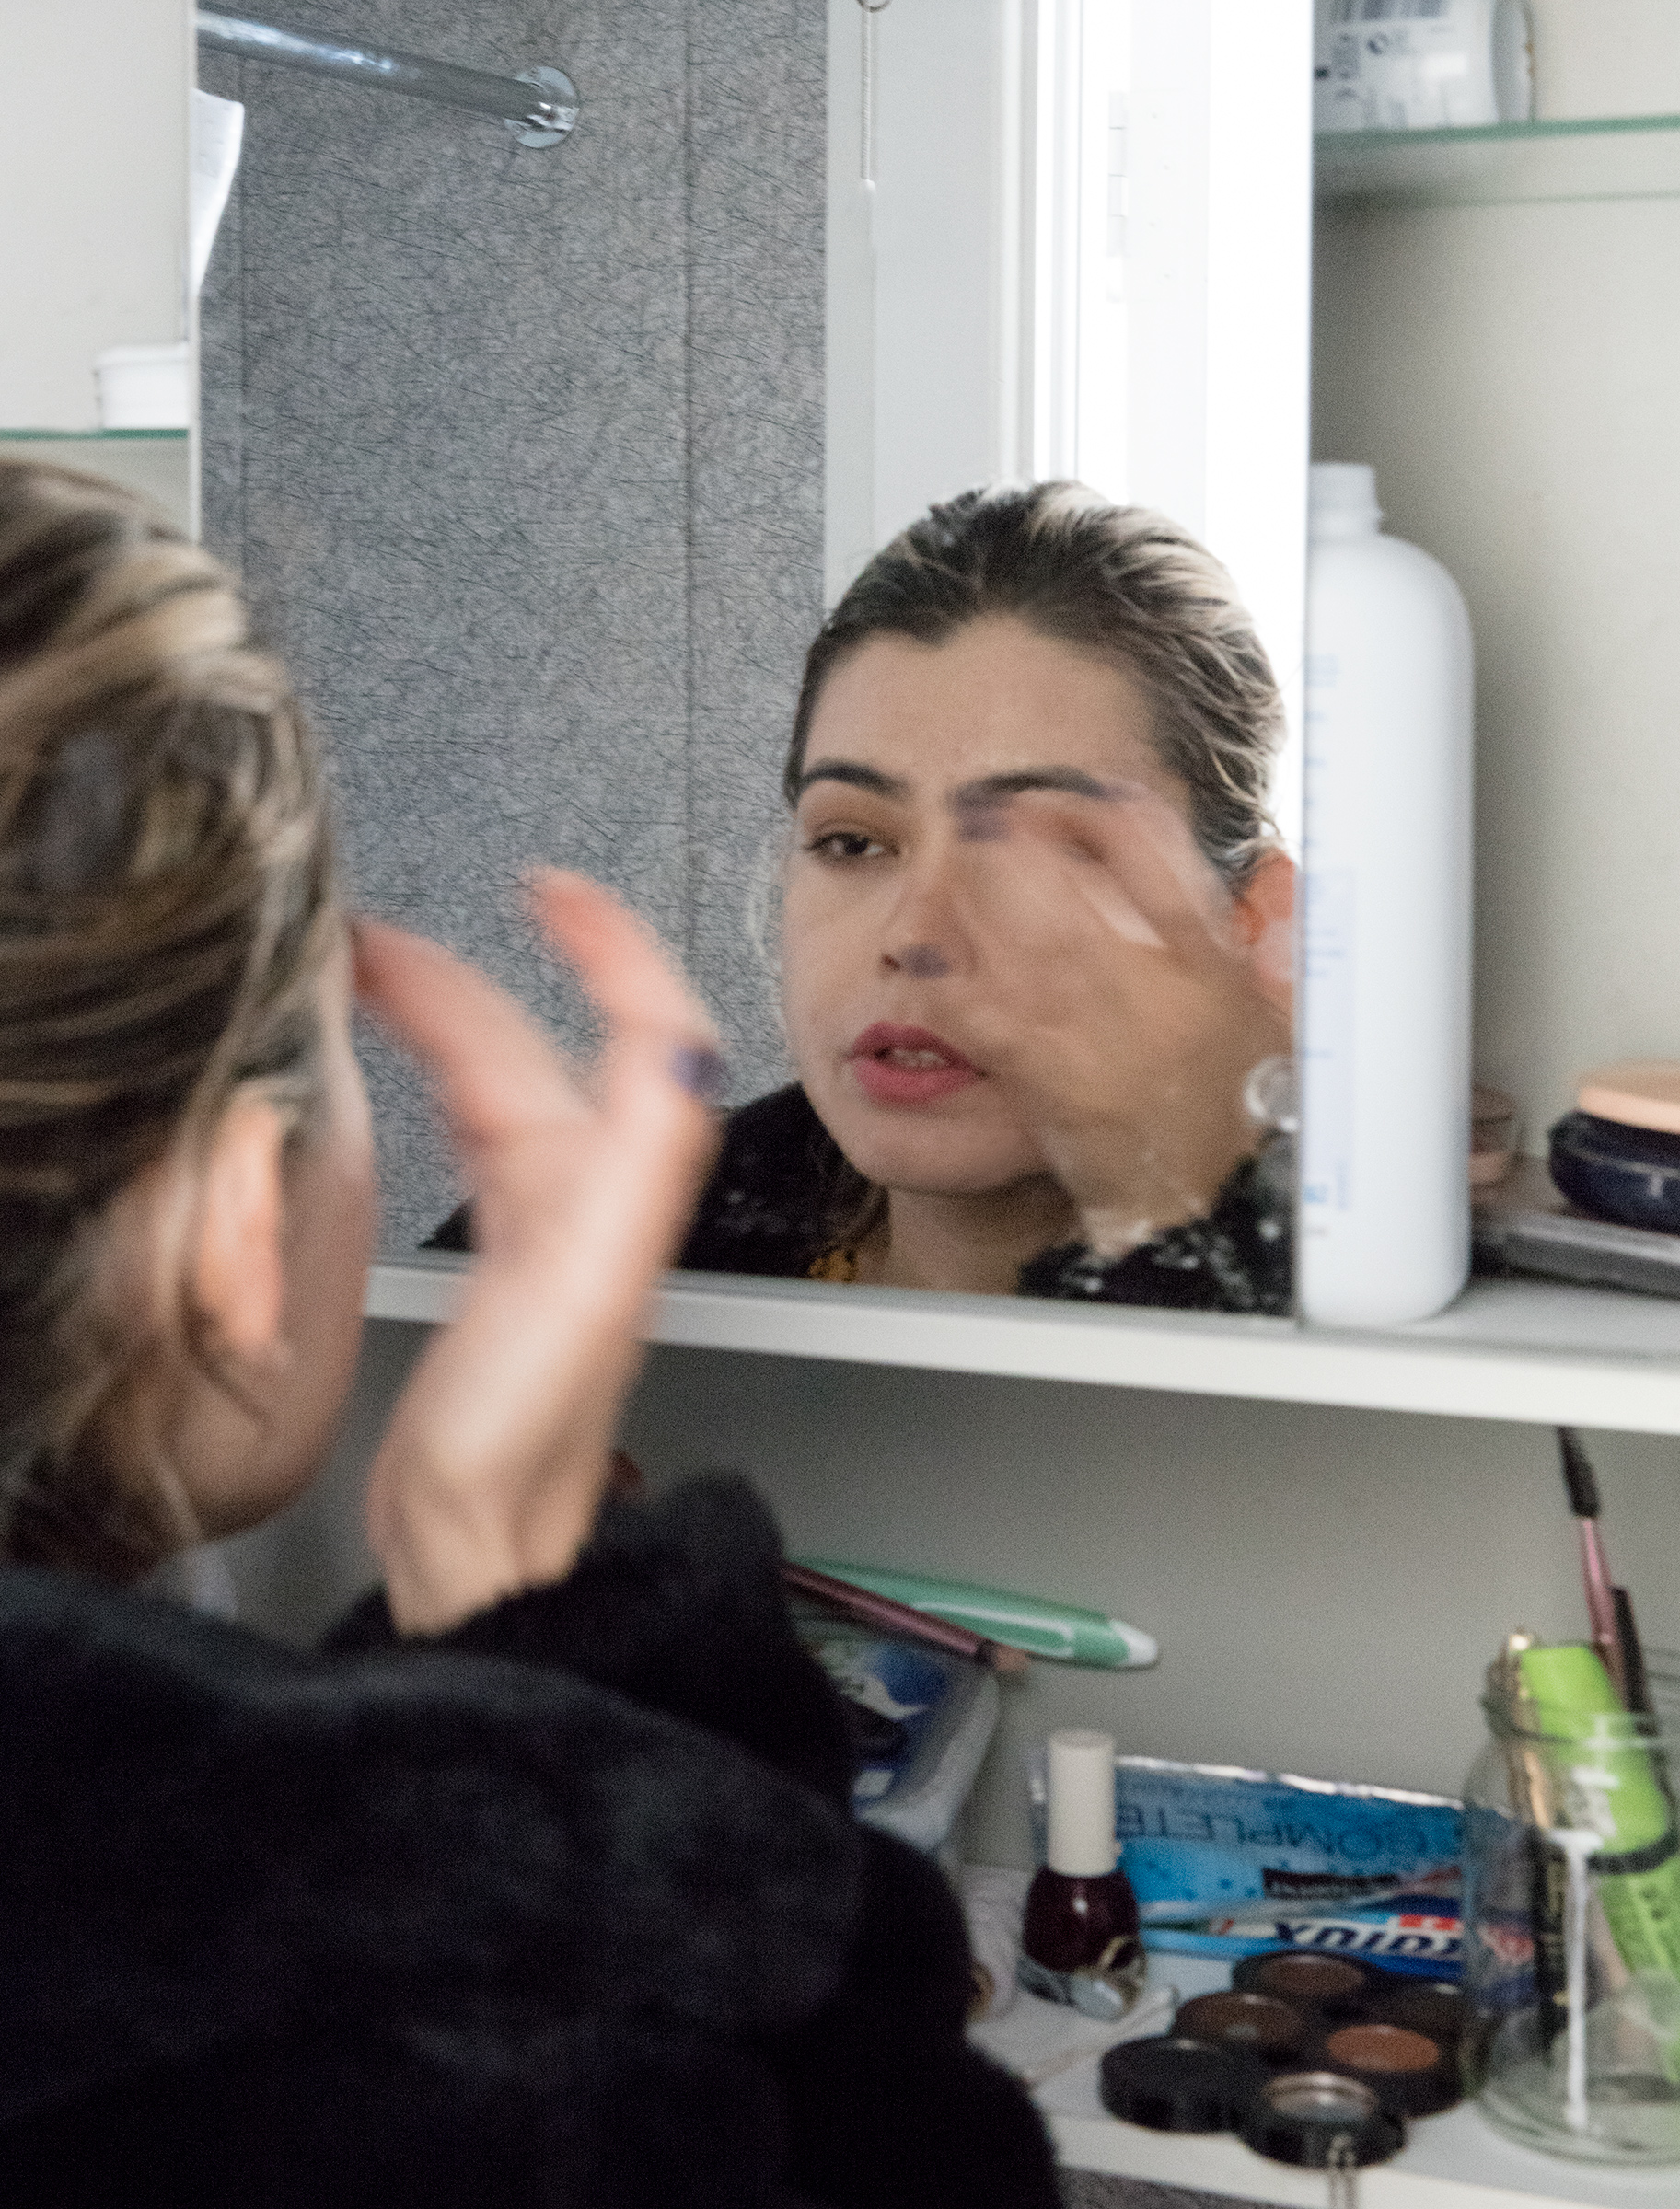 Basira applying makeup in her bathroom